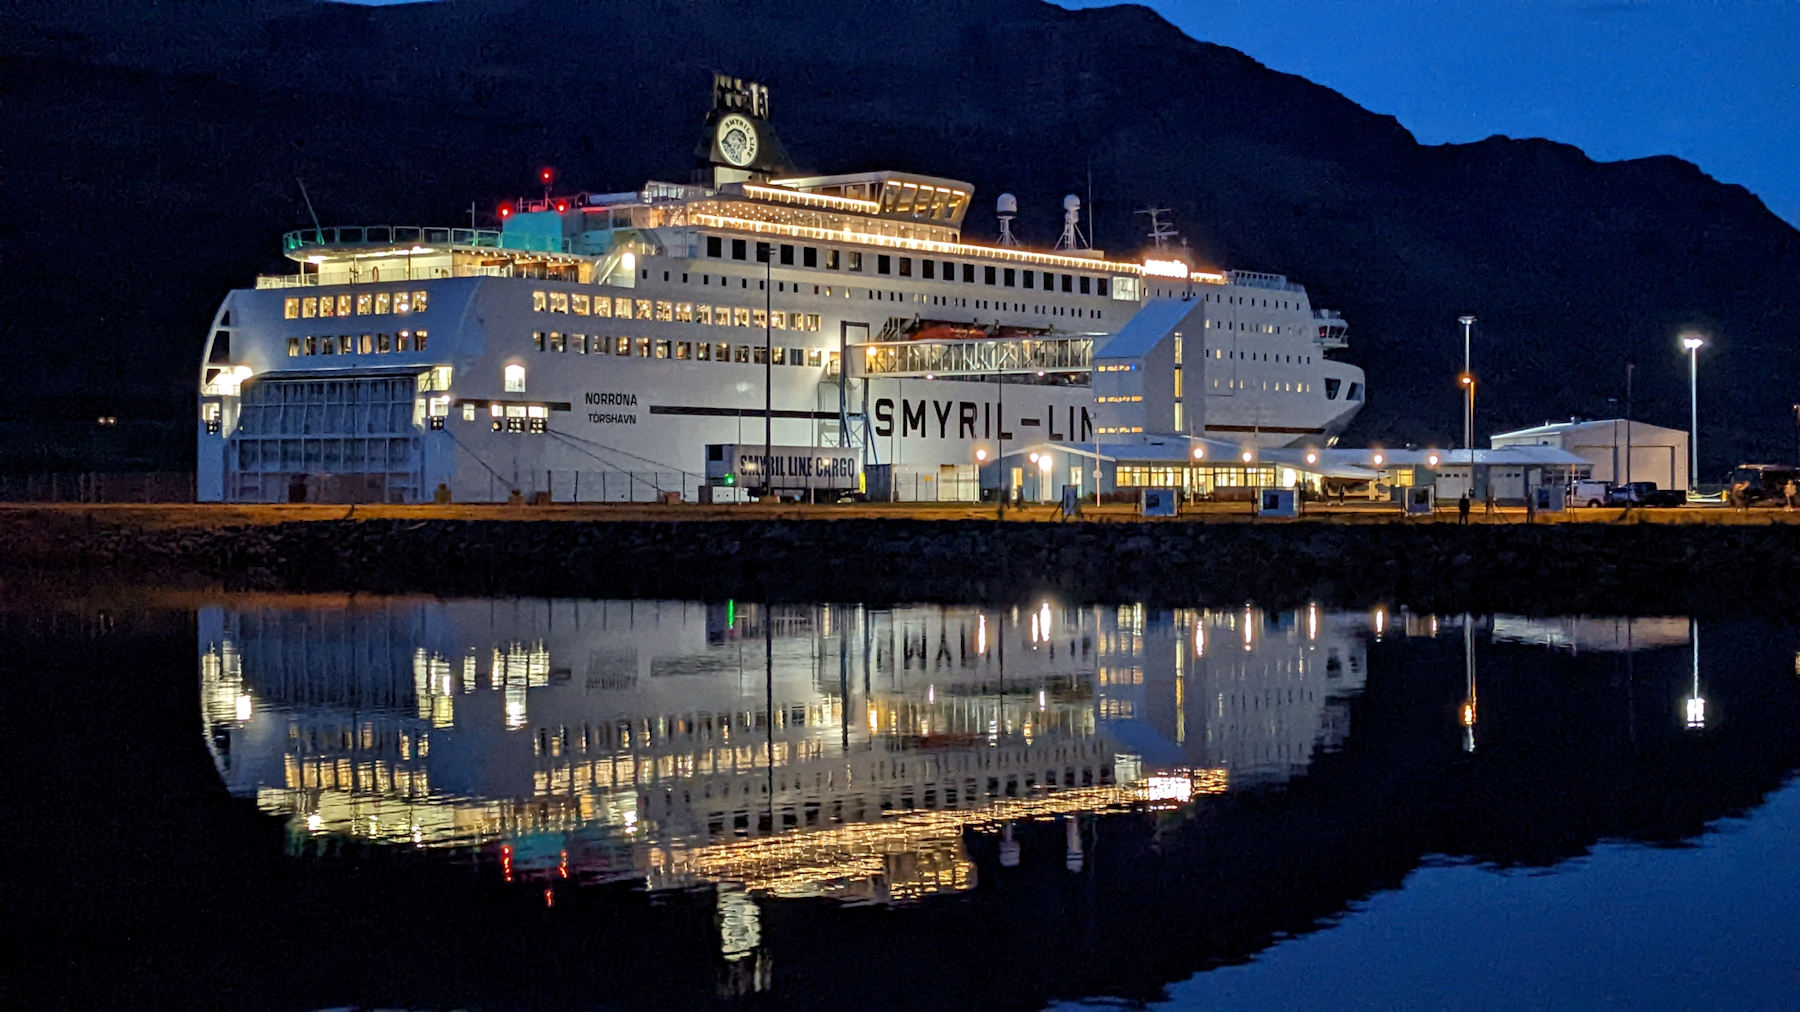 Schiff Norröna hell erleuchtet fotografiert bei Nacht